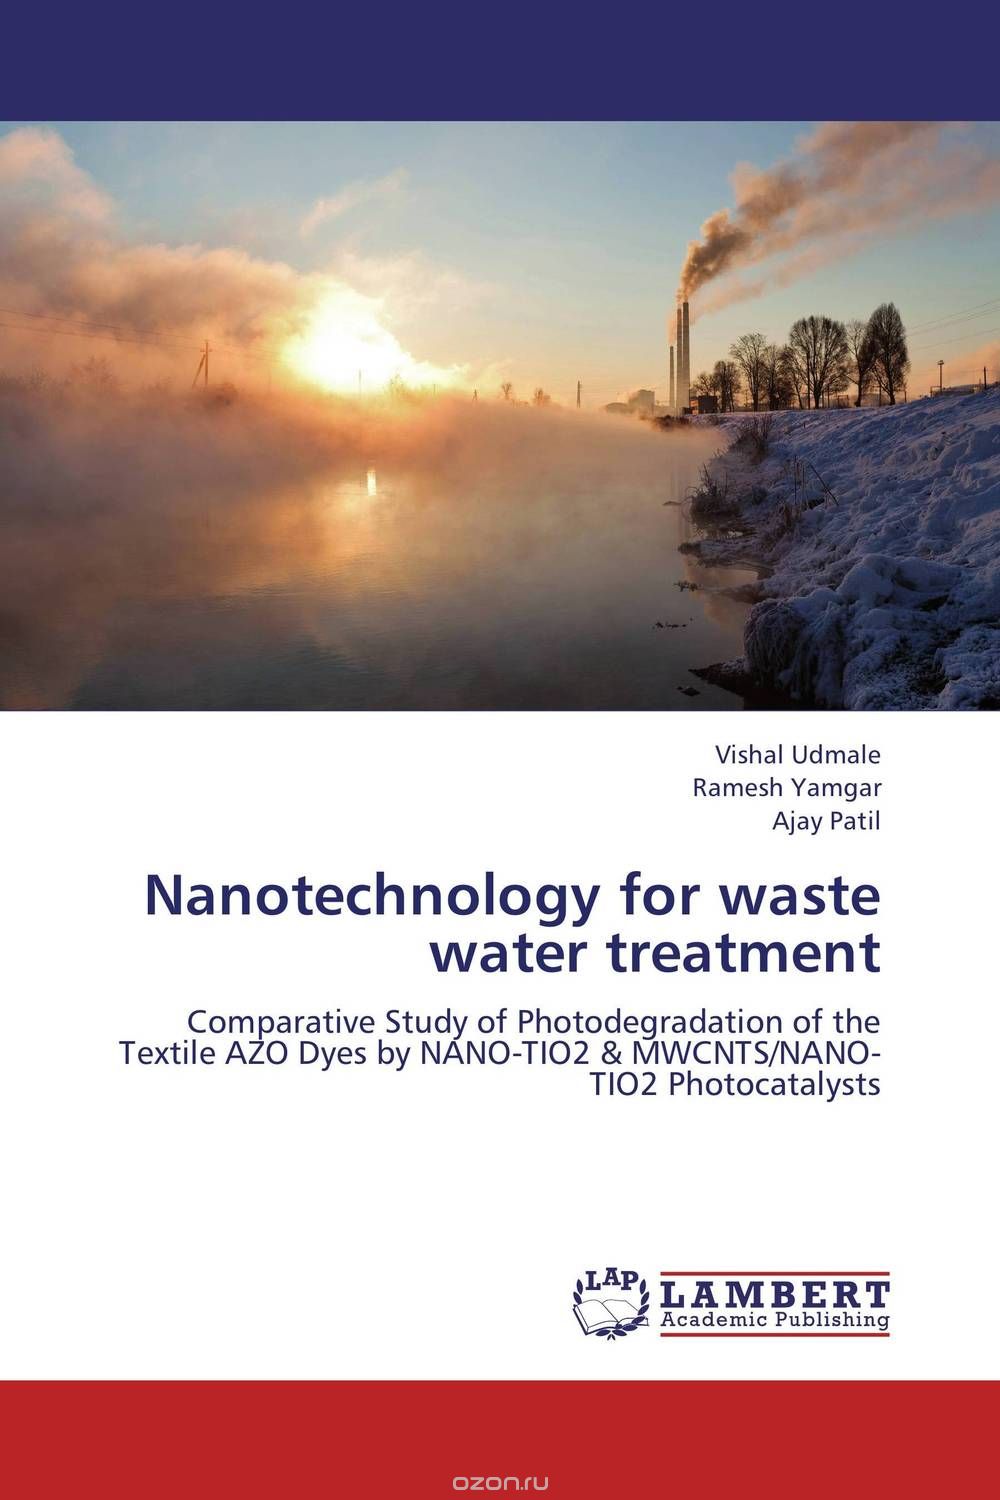 Скачать книгу "Nanotechnology for waste water treatment"